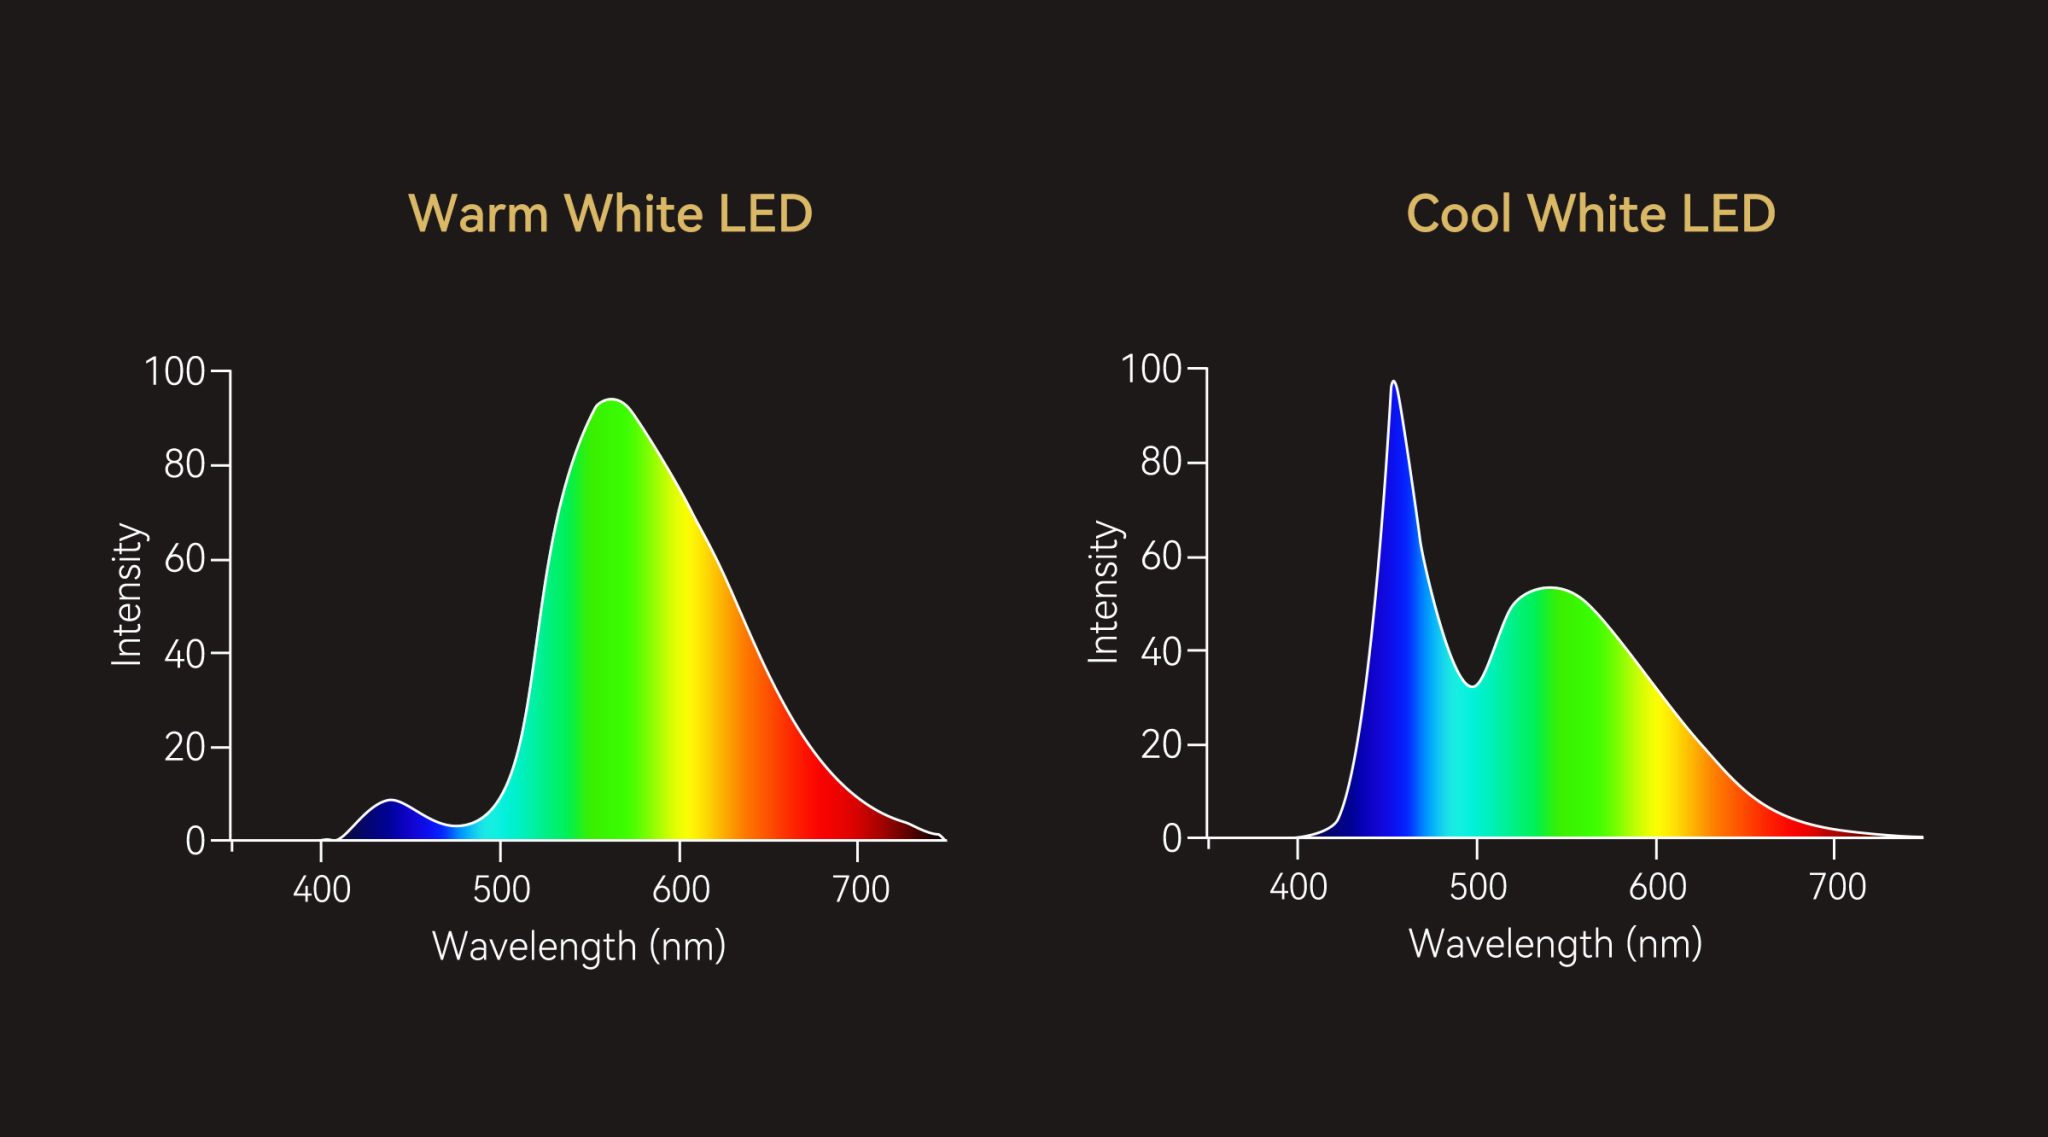 LED light spectrum for warm white and cool white leds